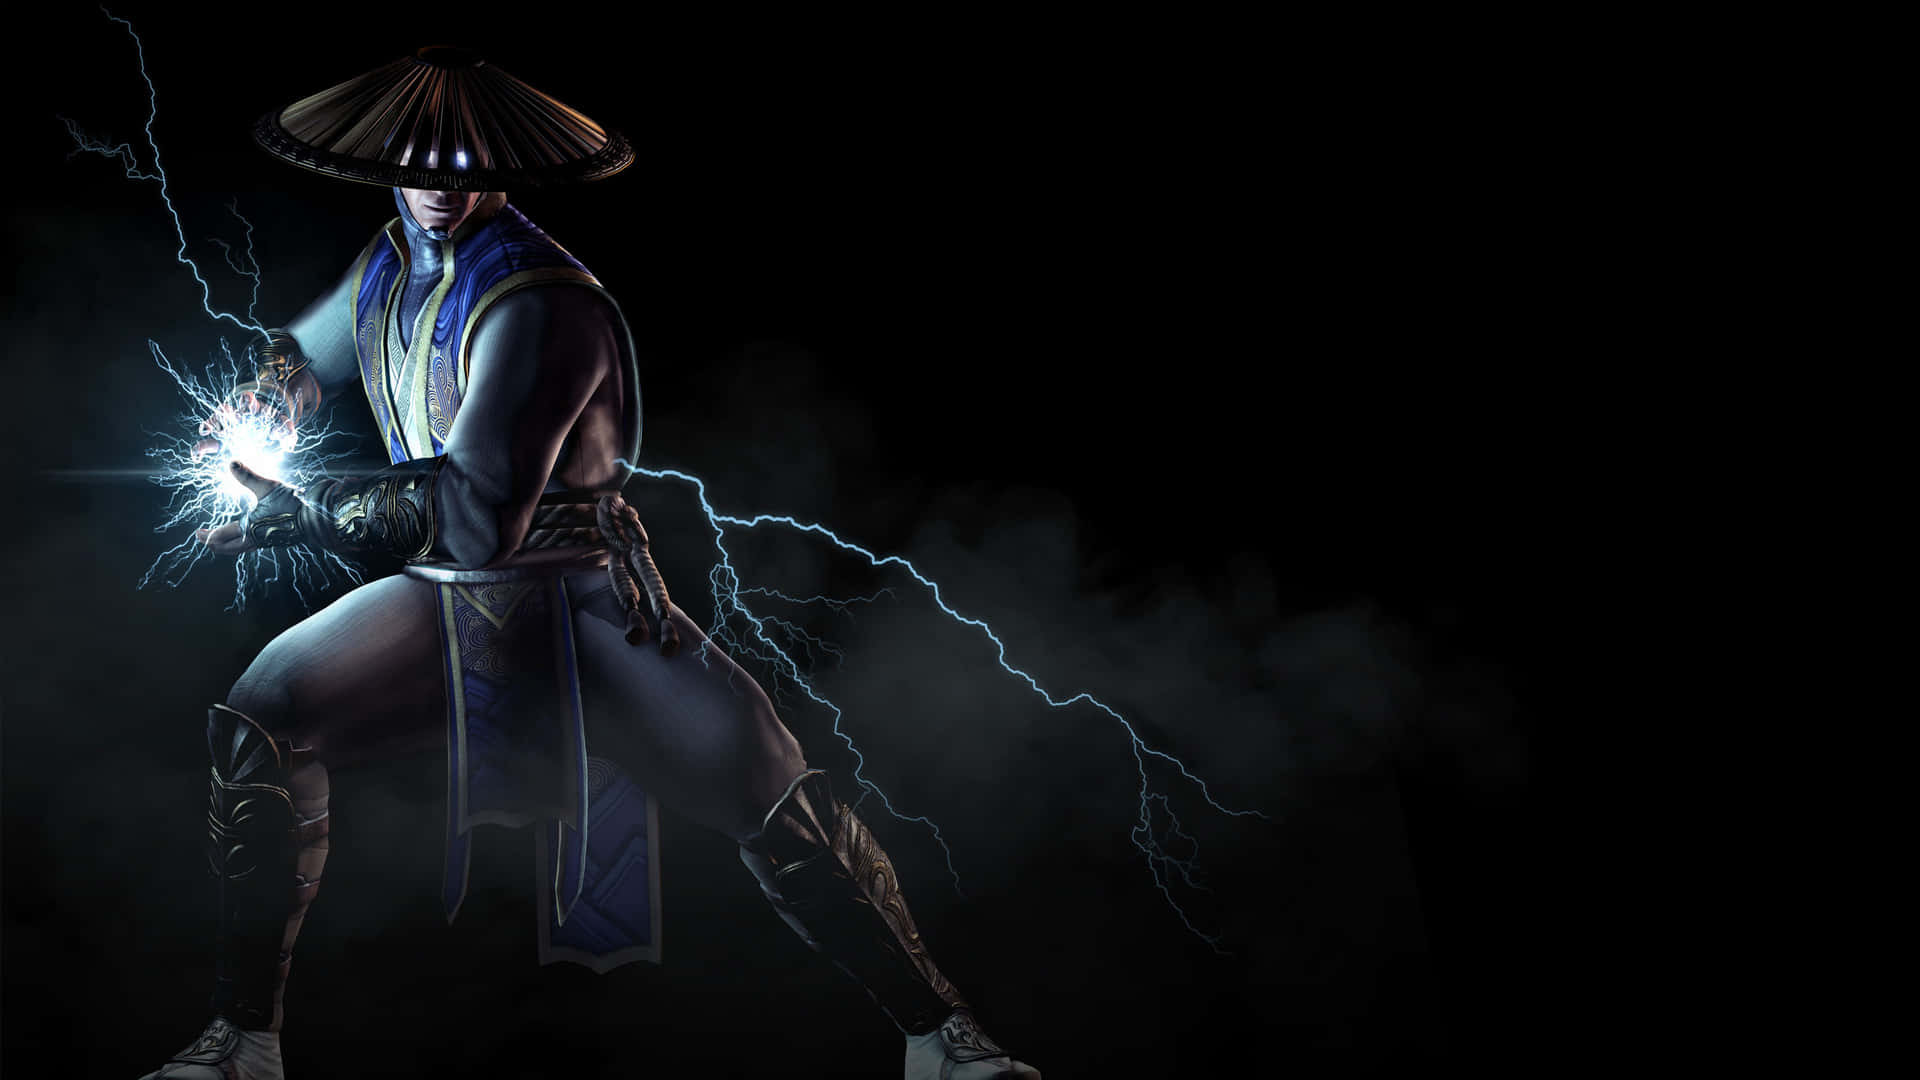 Thunder God Raiden in an electrifying Mortal Kombat battle Wallpaper